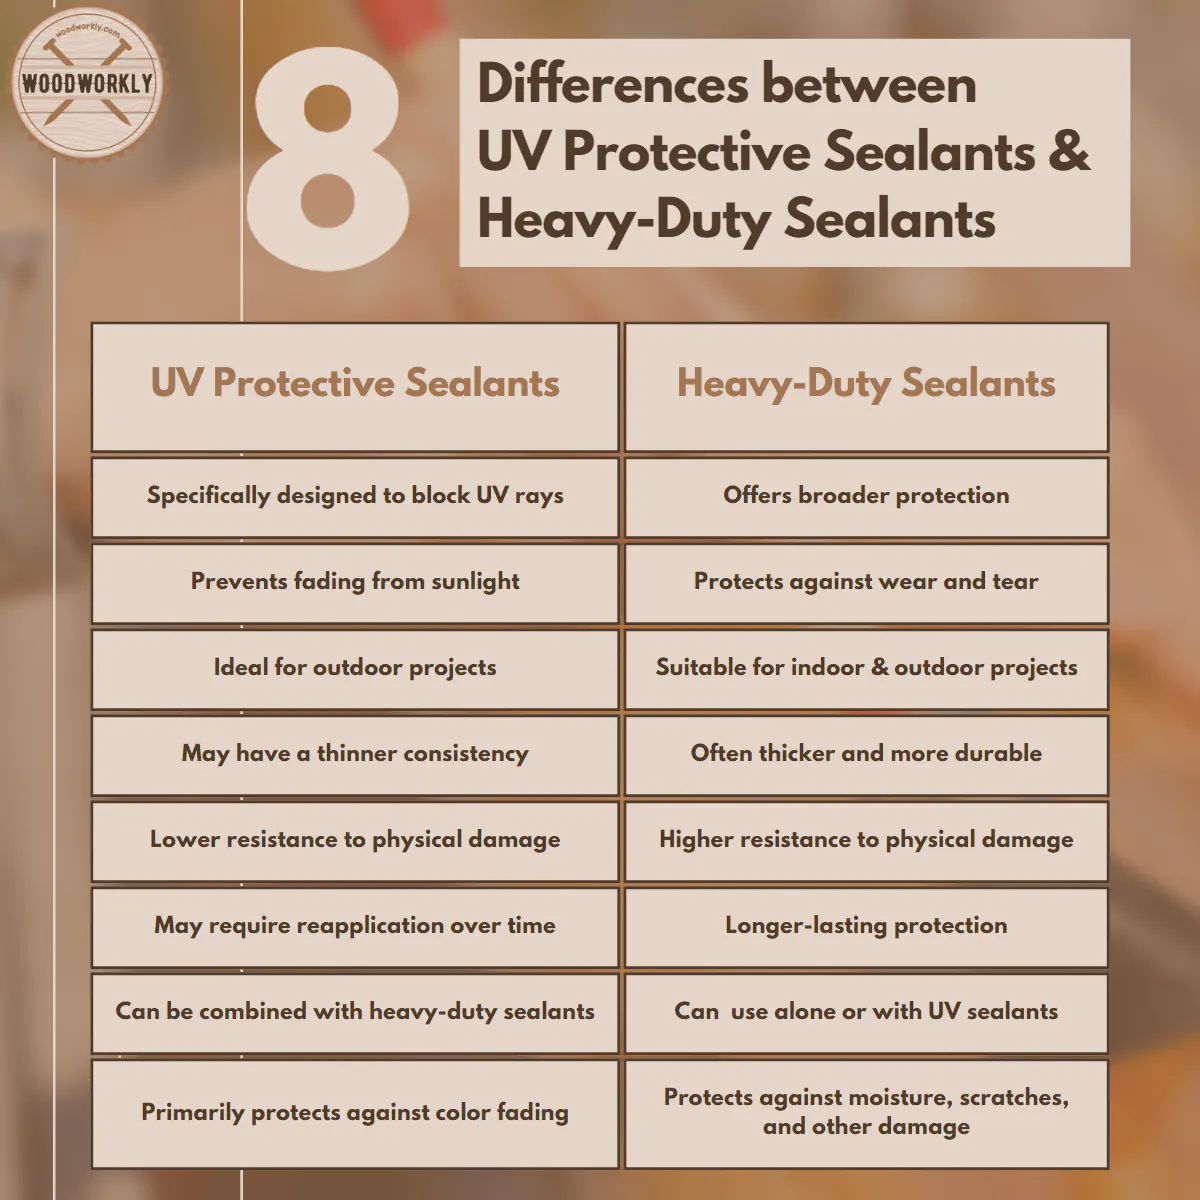 Differences between UV Protective Sealants & Heavy-Duty Sealants